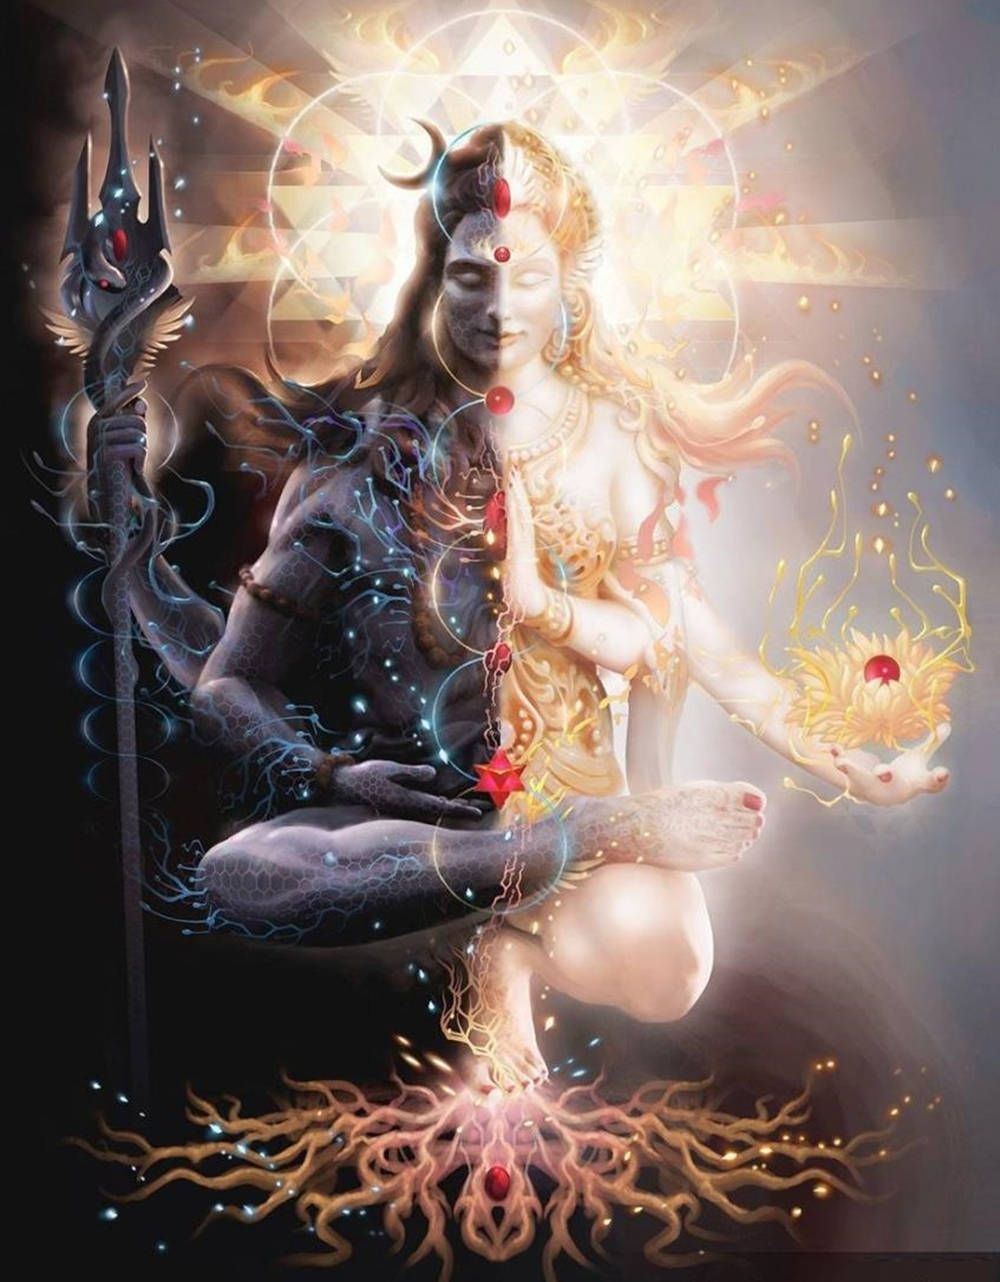 Download Forms Of Lord Shiva Of Mahakal Hd Wallpaper | Wallpapers.com